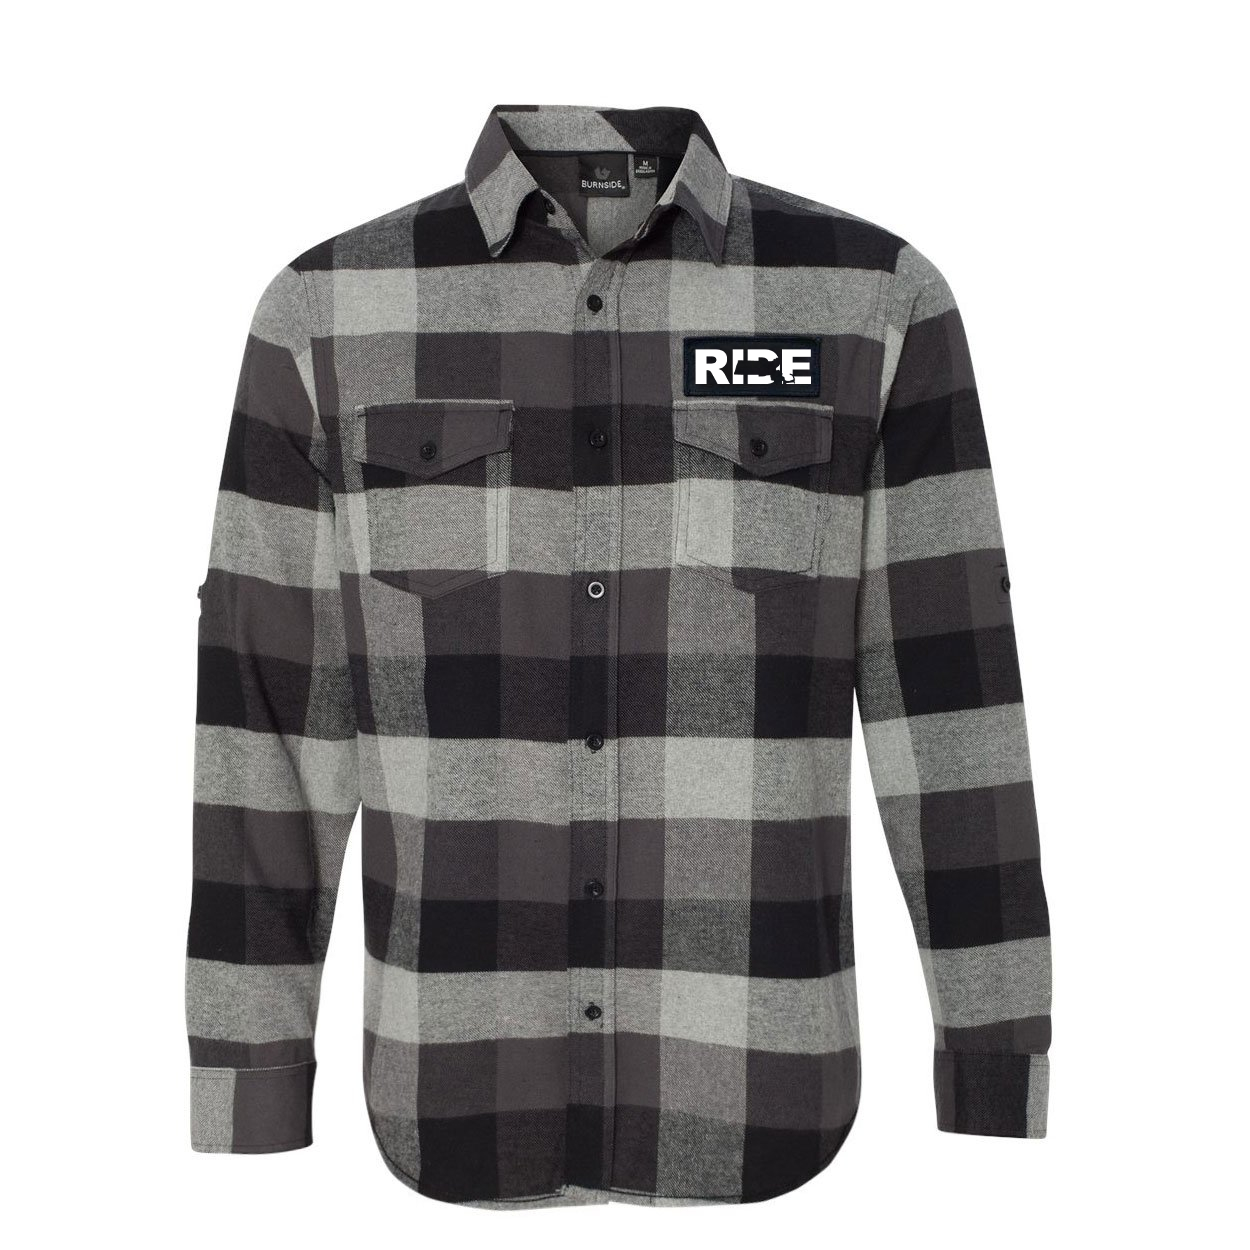 Ride Massachusetts Classic Unisex Long Sleeve Woven Patch Flannel Shirt Black/Gray (White Logo)